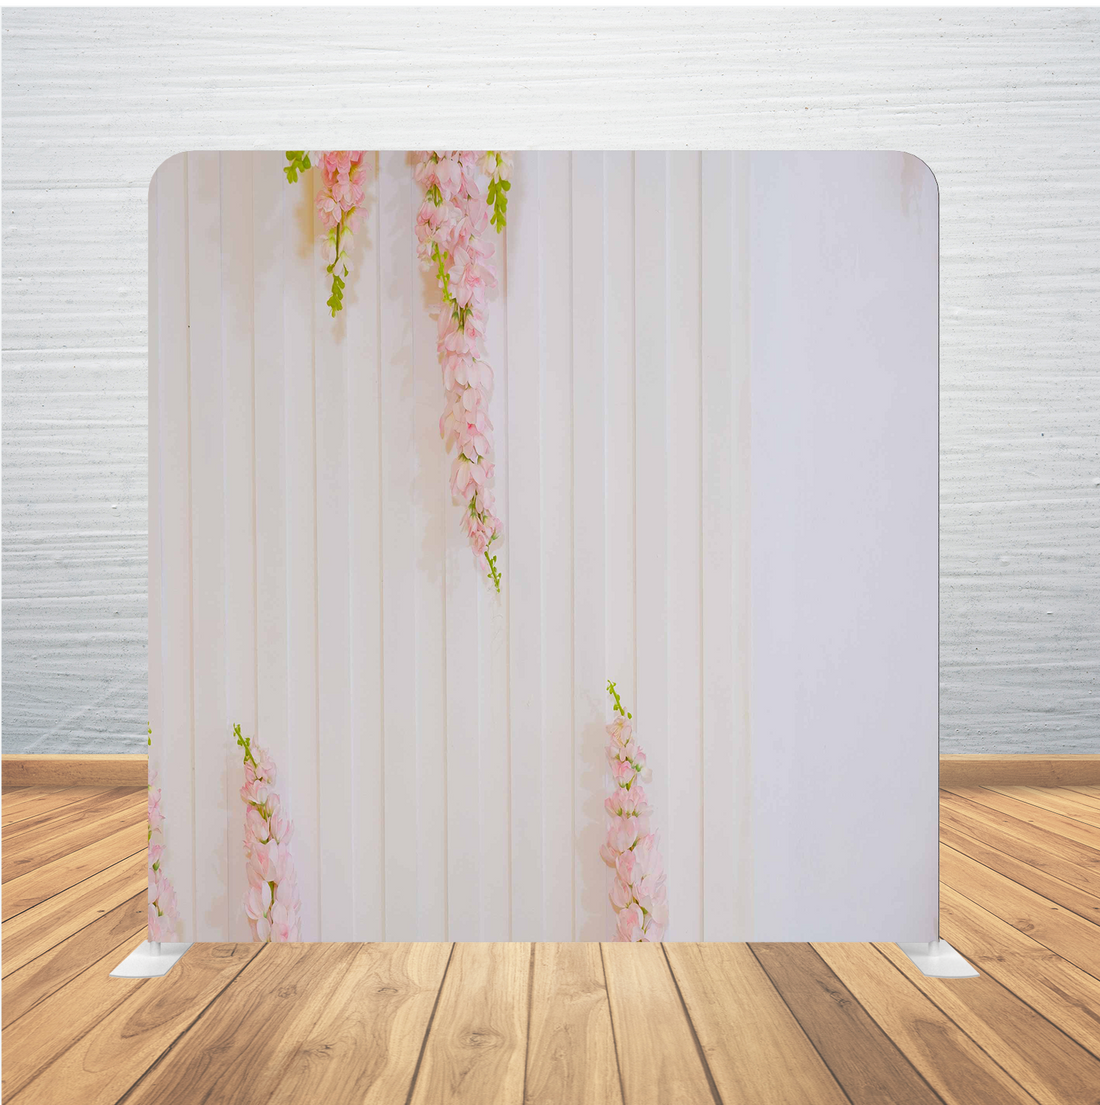 8X8 Pillowcase Tension Backdrop- Four Pink Floral